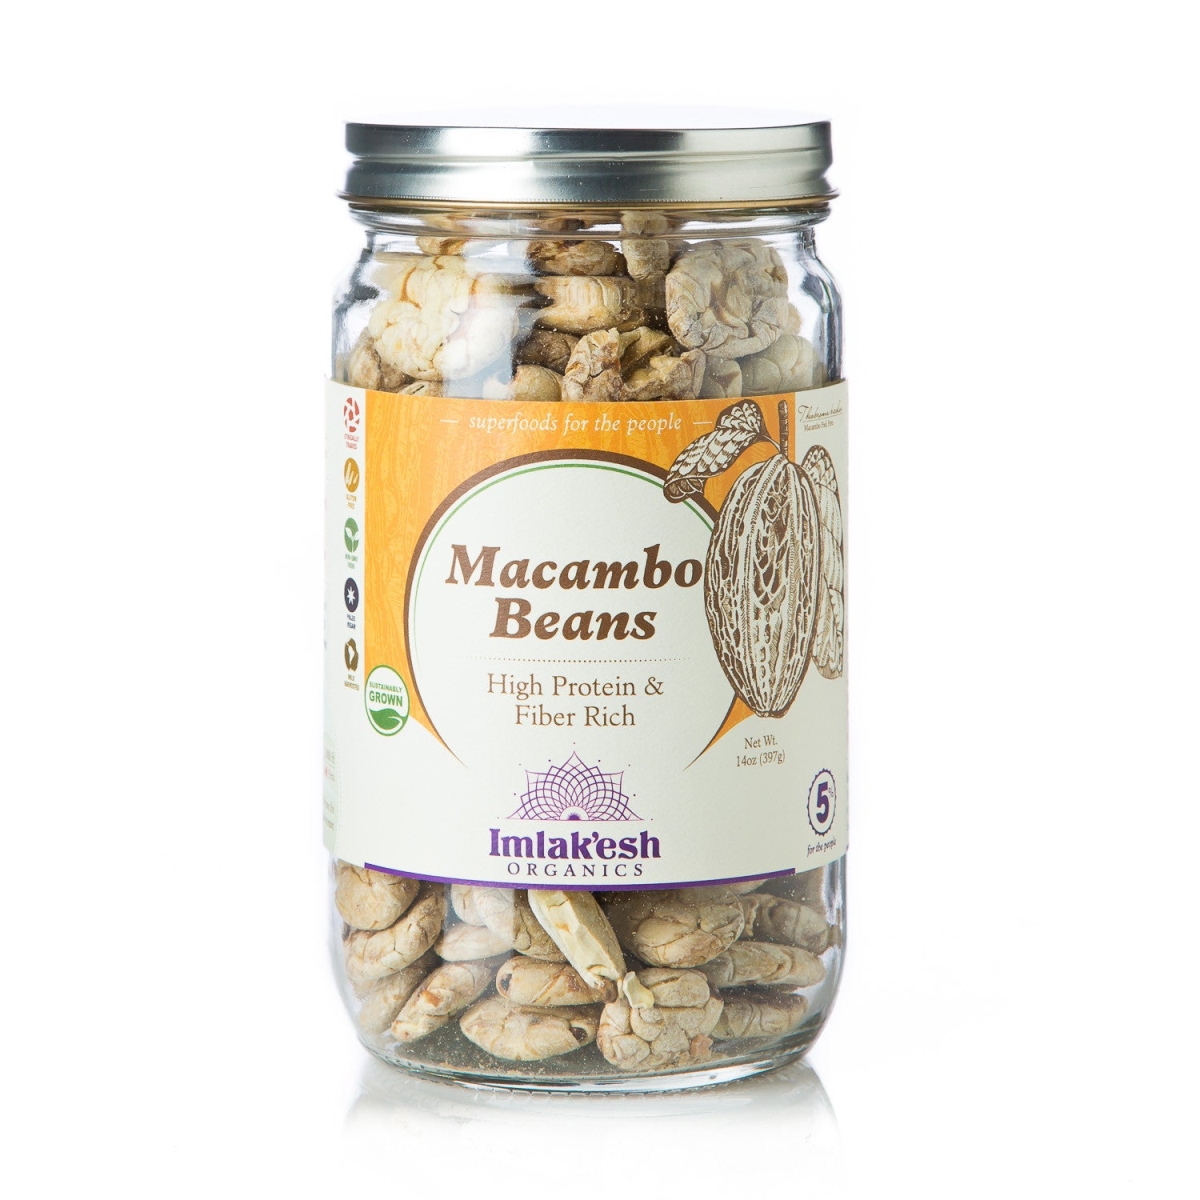 Picture of Imlakesh Organics KHCH02205583 1.75 oz Macambo Beans